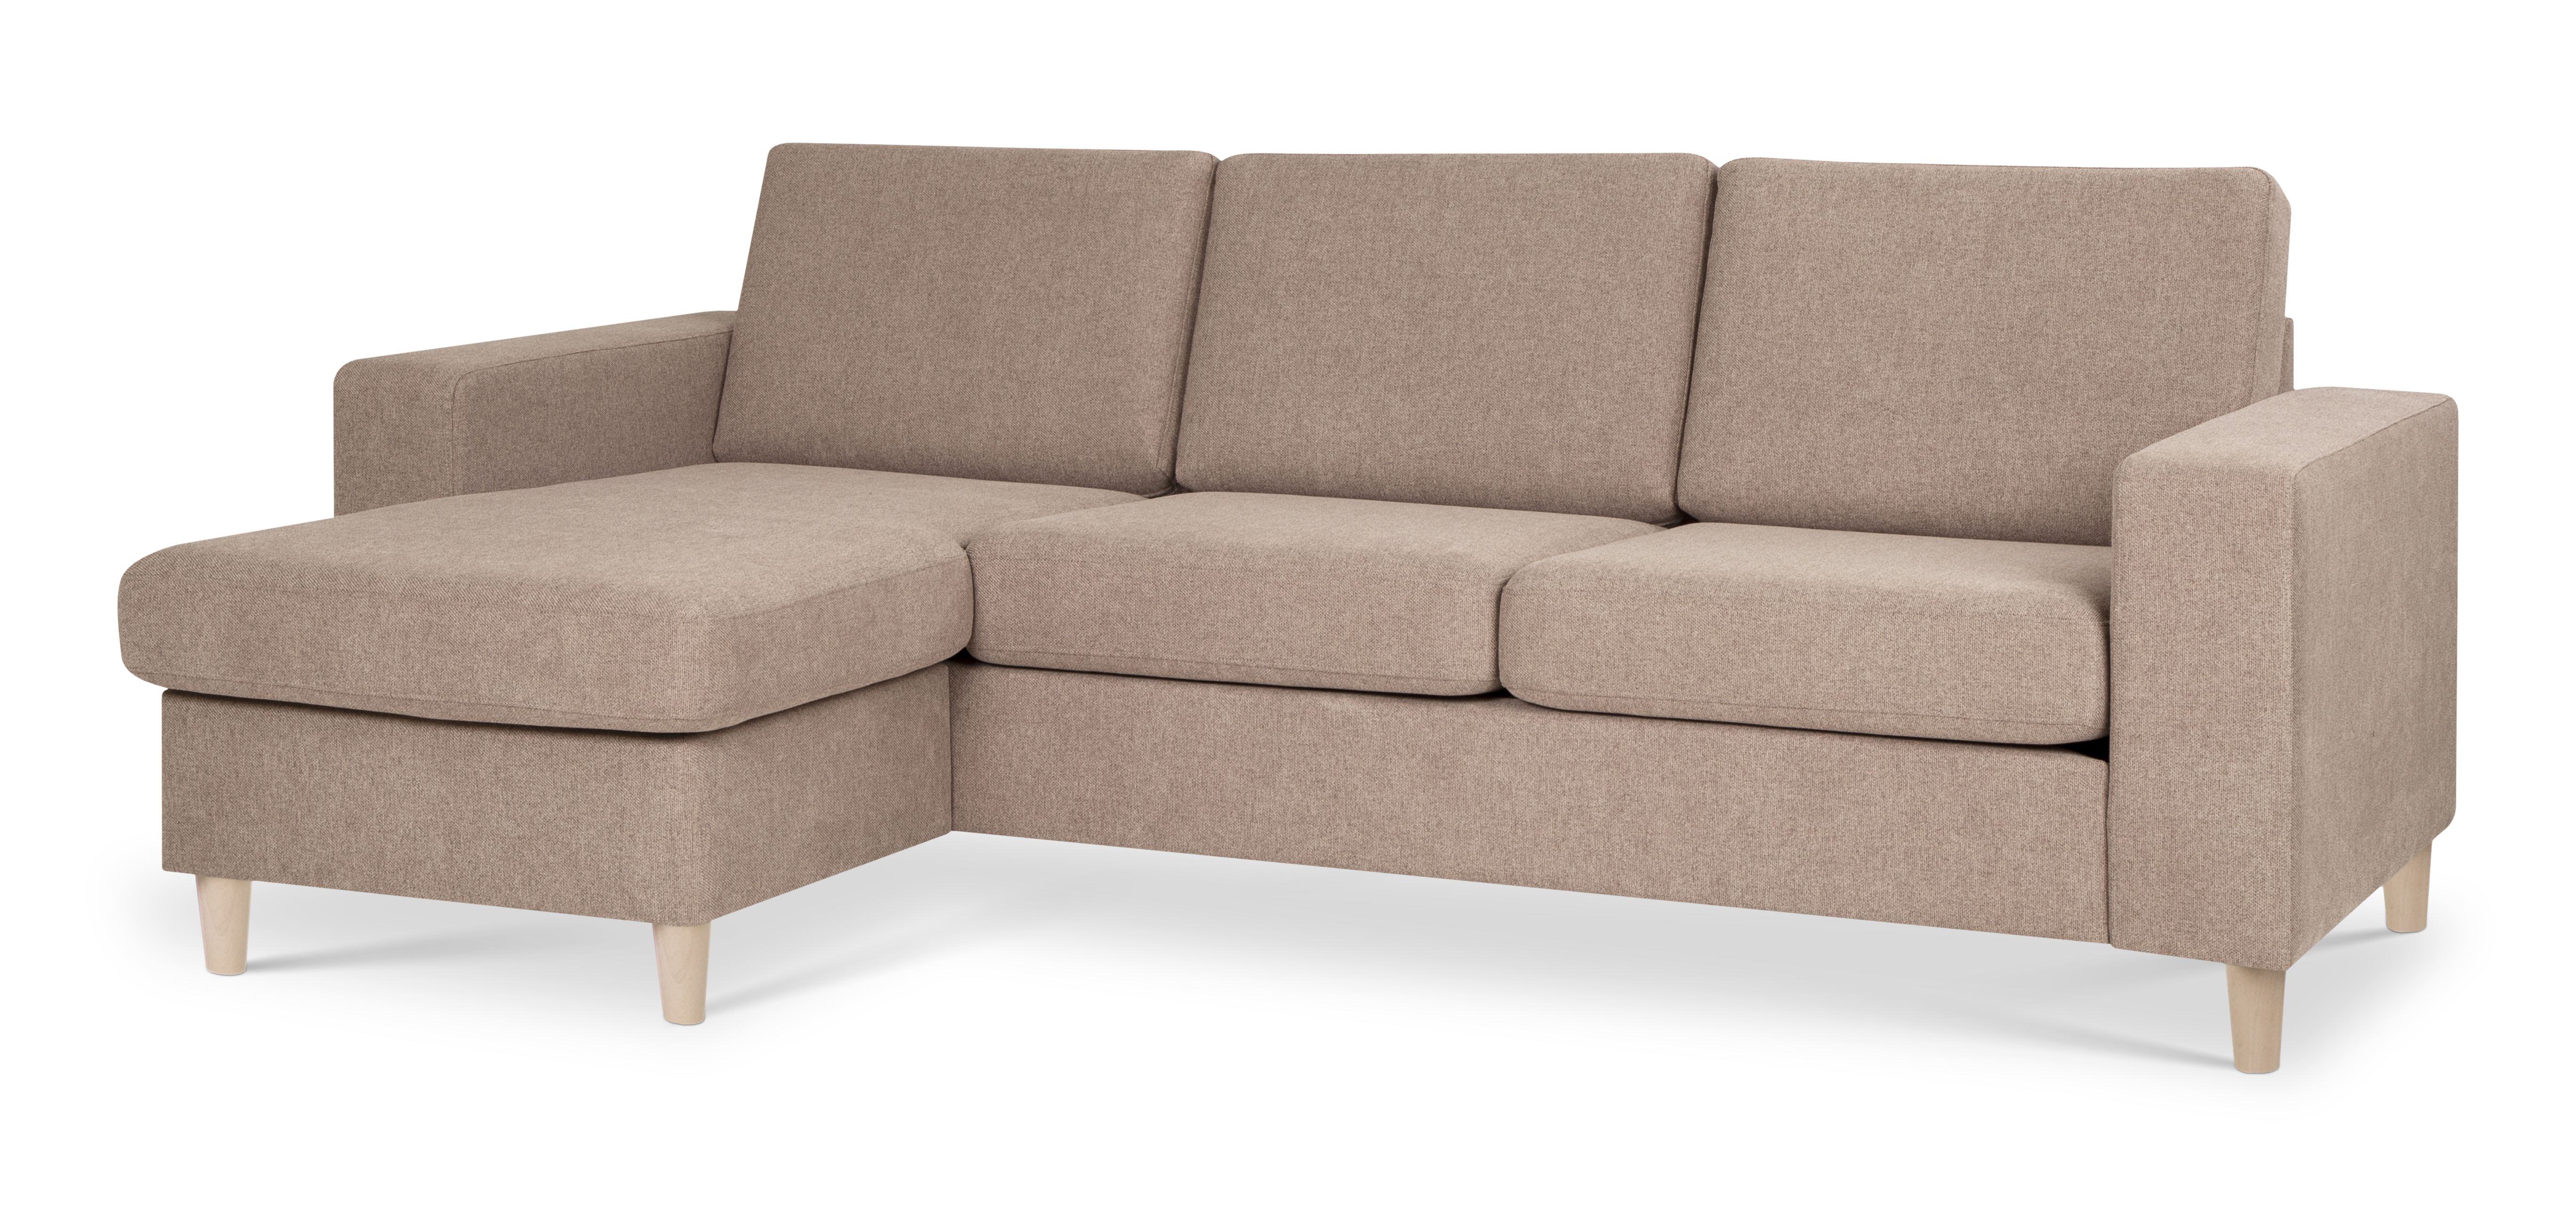 Pan set 1 3D sofa med chaiselong - antelope beige polyester stof og natur træ